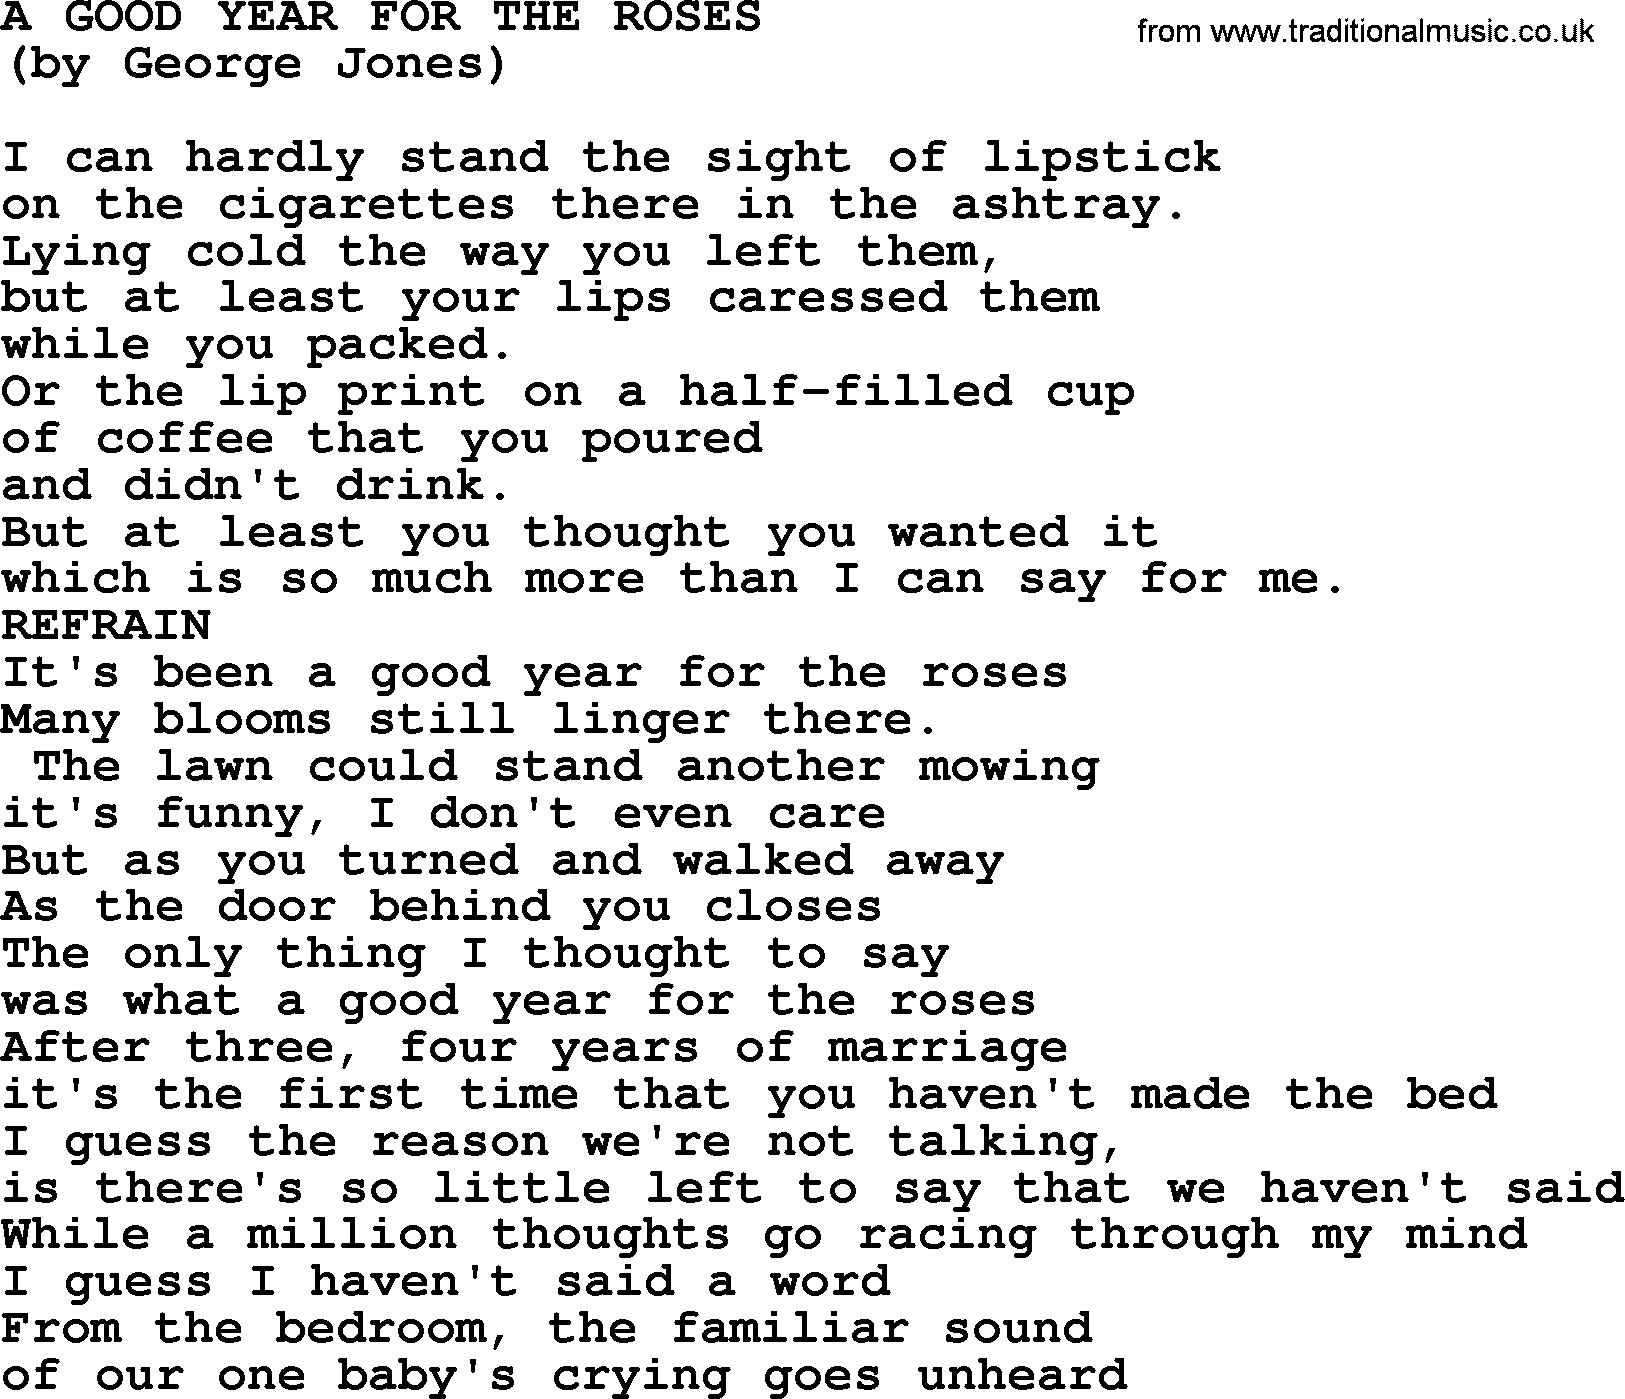 Merle Haggard song: A Good Year For The Roses, lyrics.